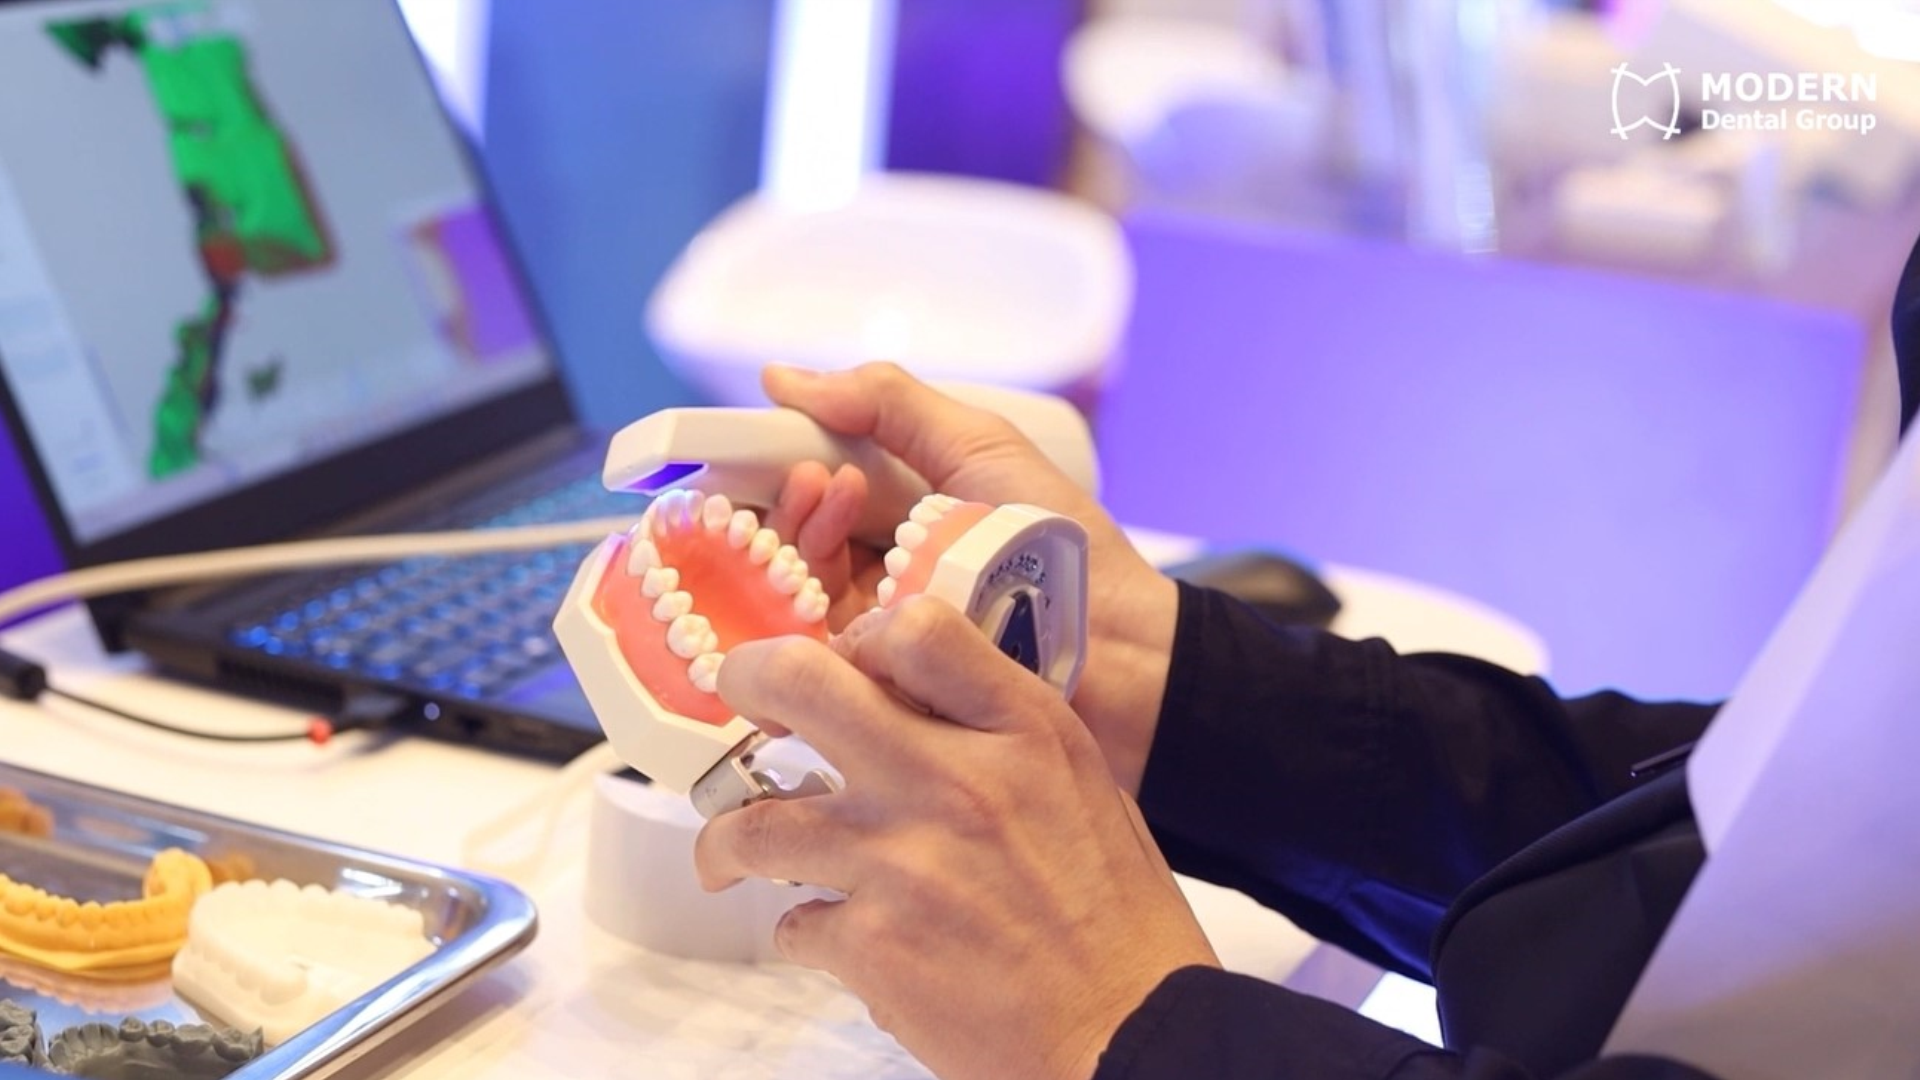 Modern Dental Group Leads the Digital Dentistry